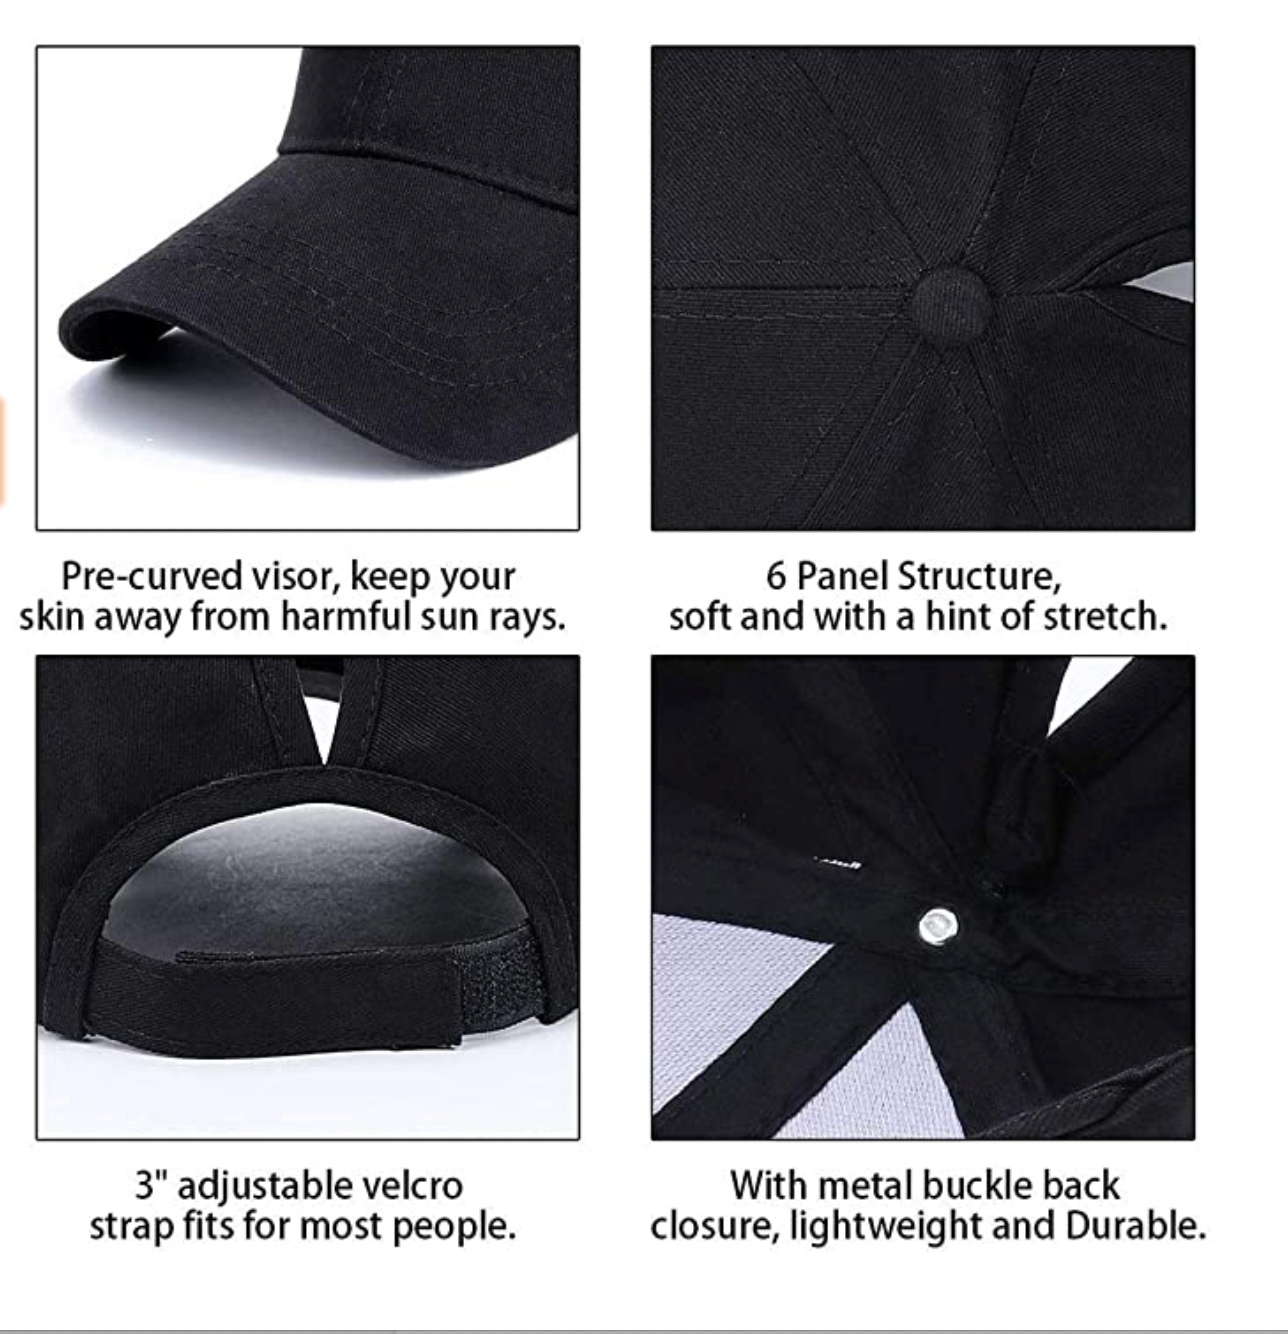 Aubree Hat (Black) - The Casual Company